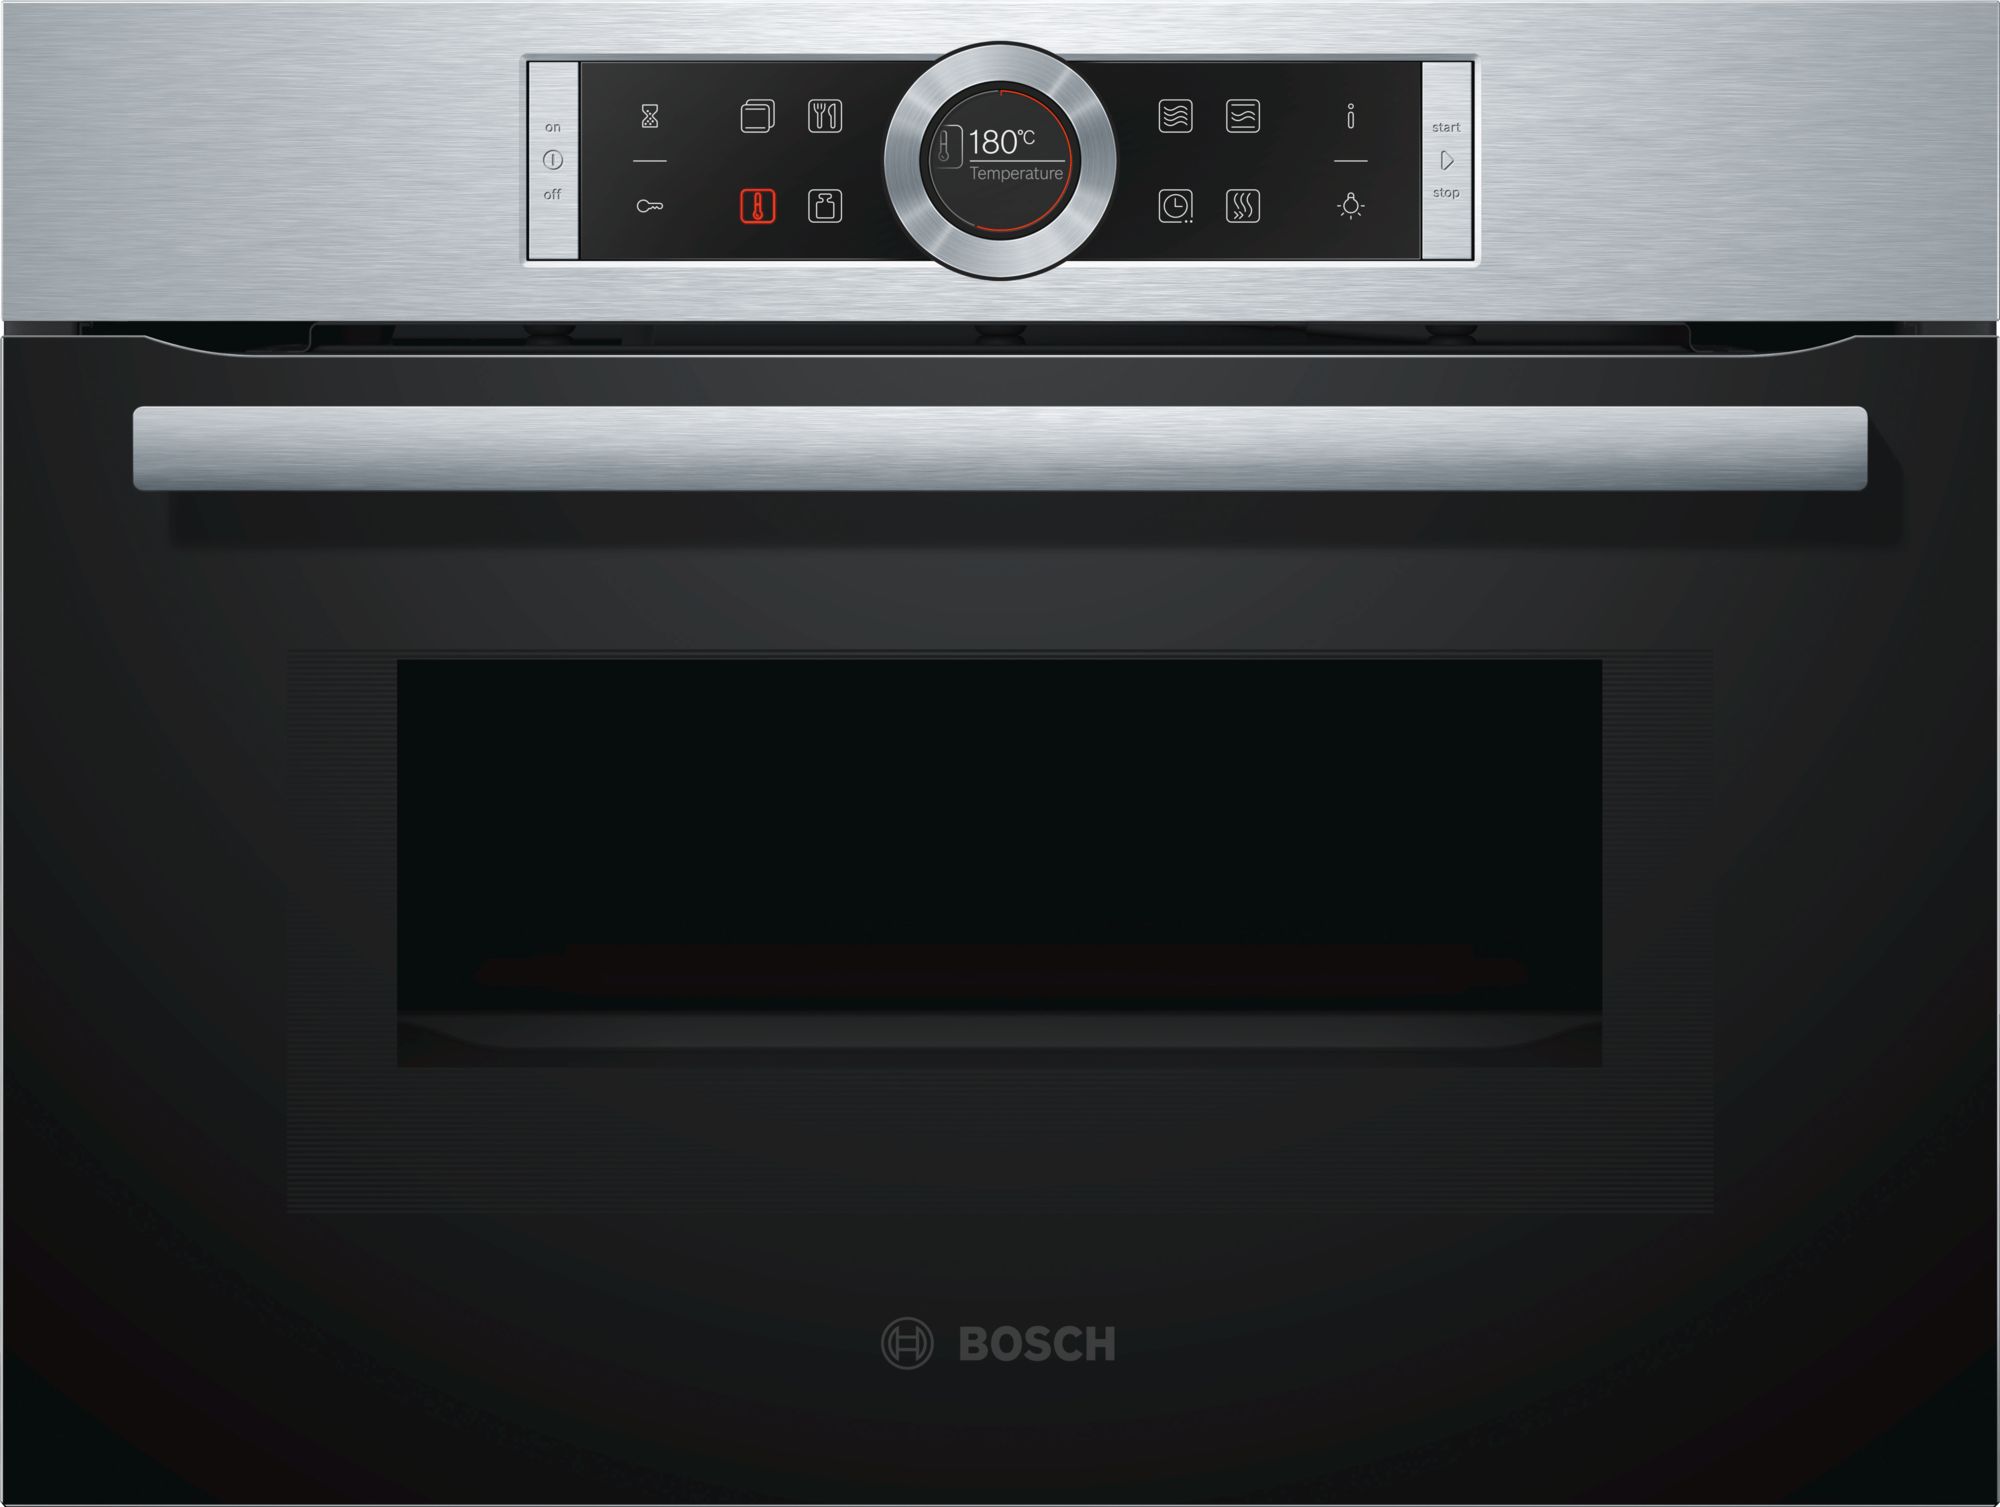 Bosch mikro-kombi ovn